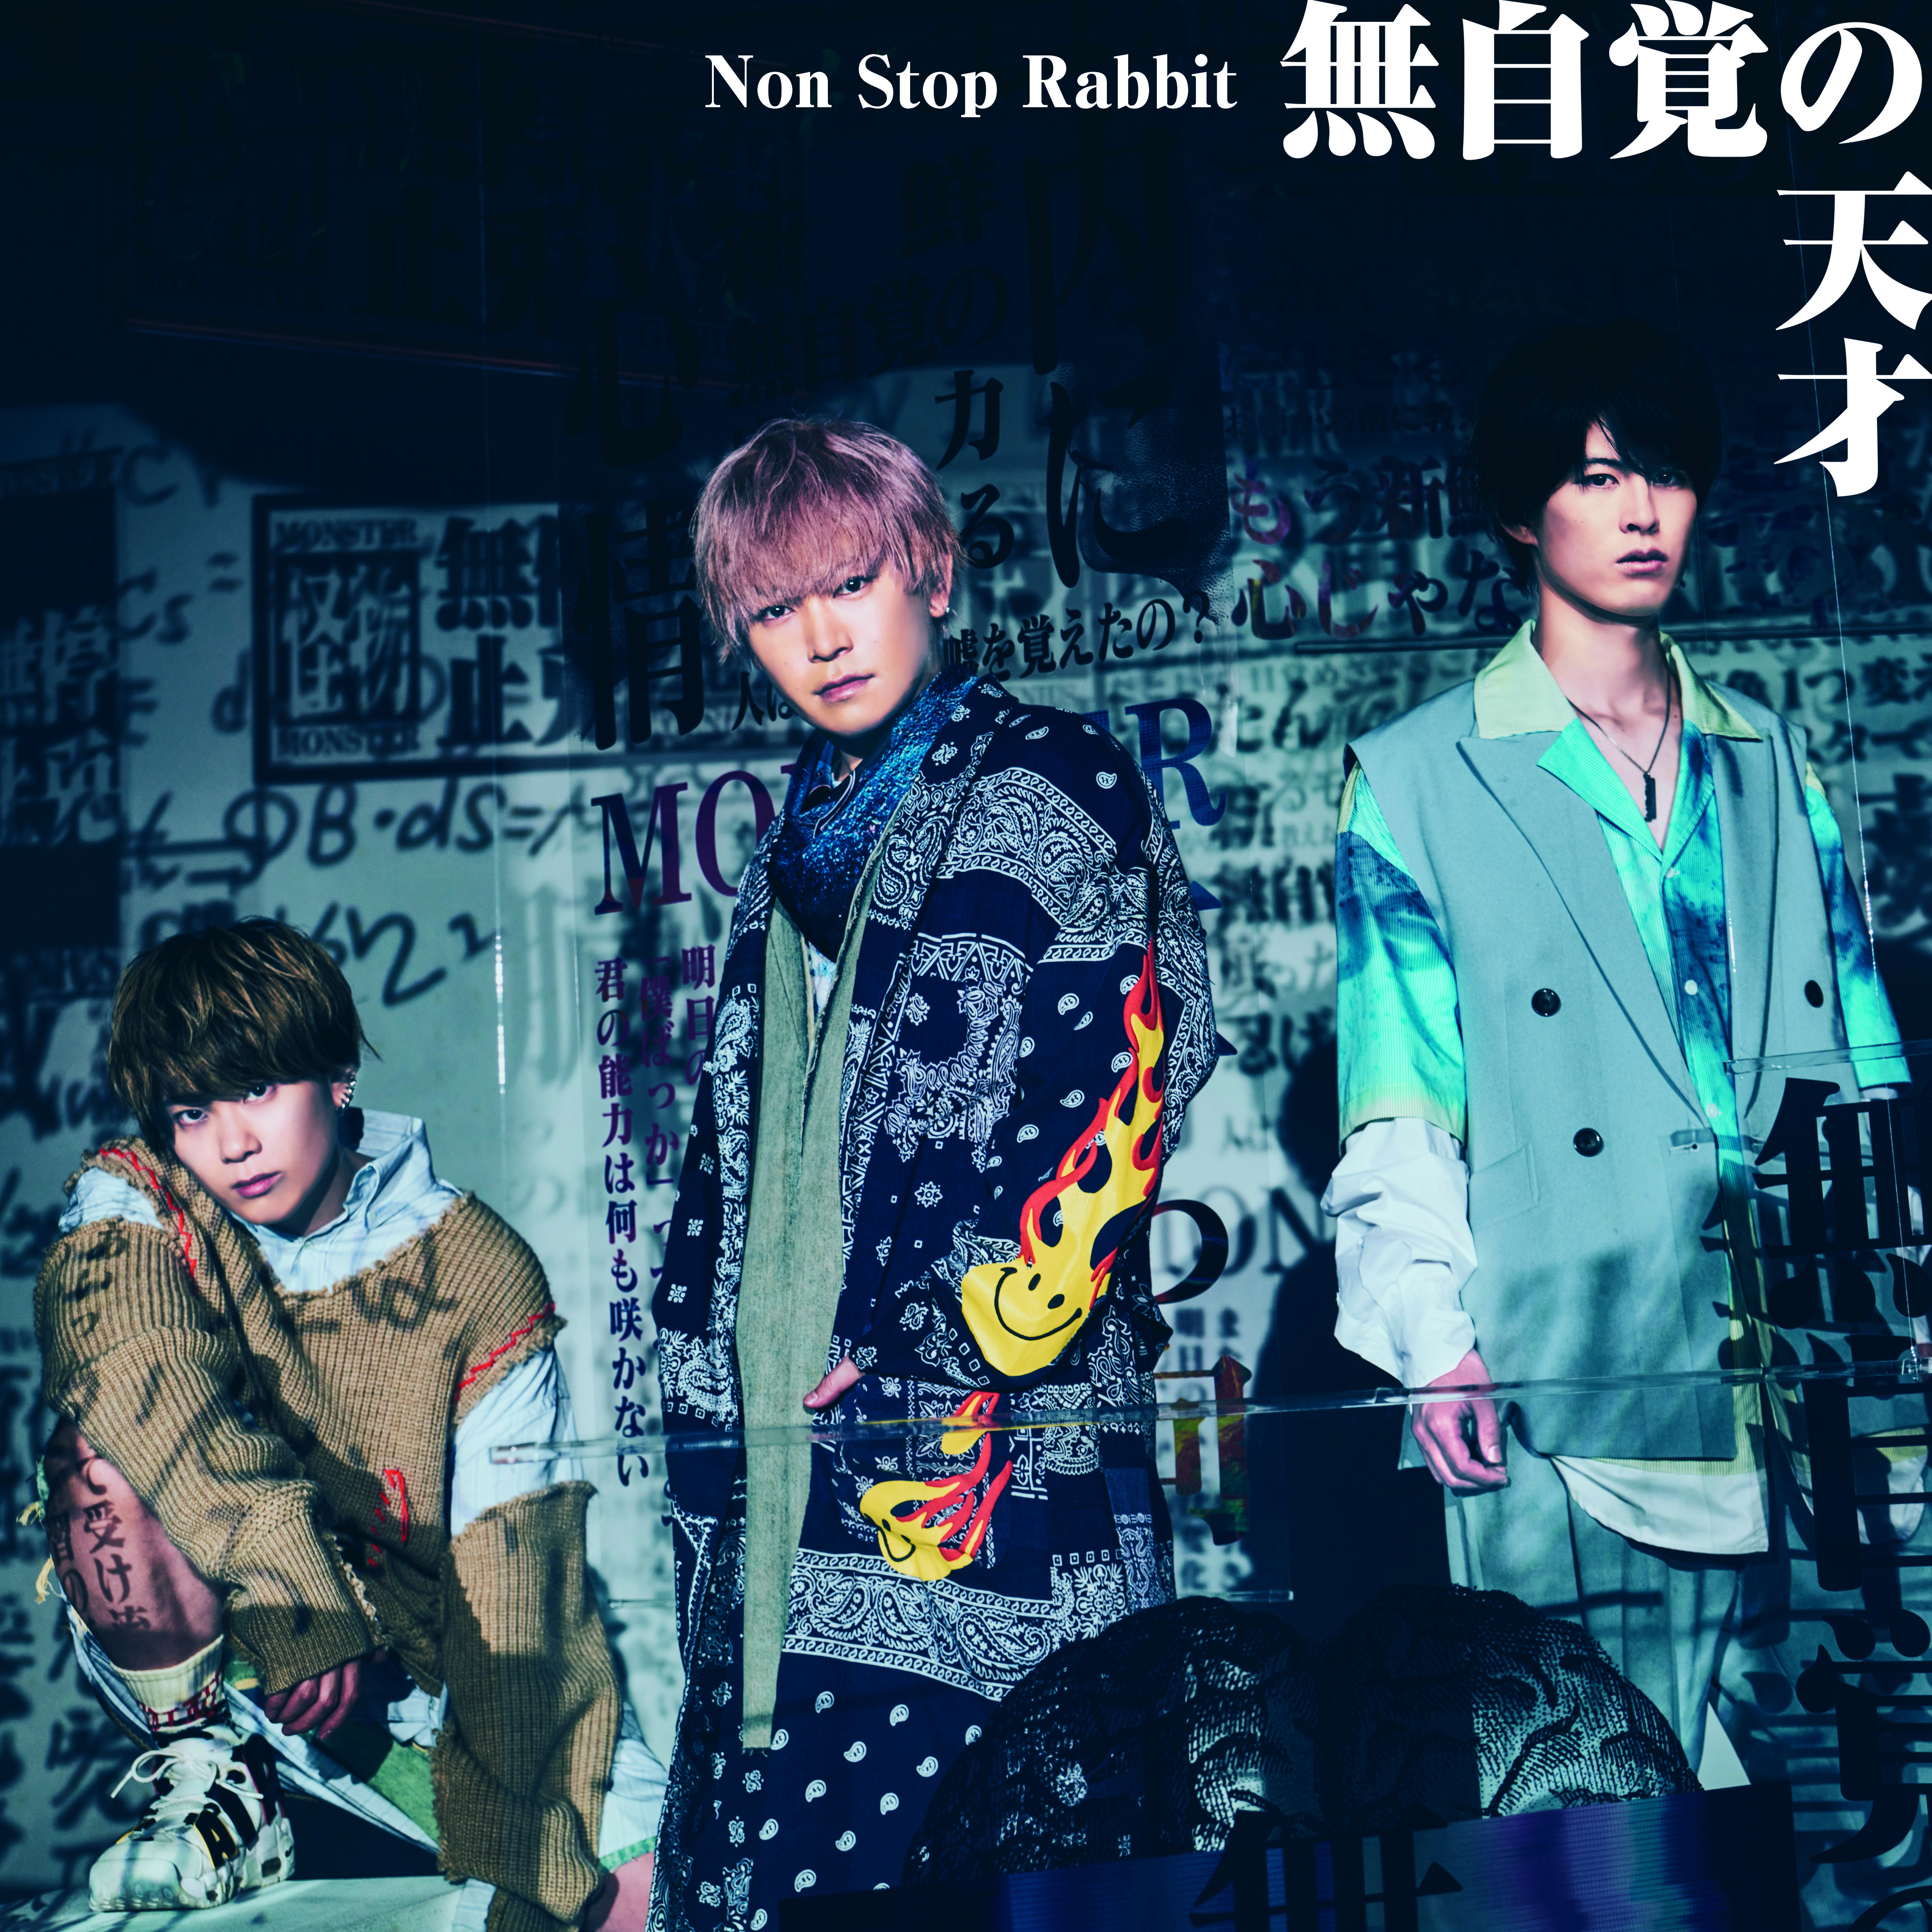 Non Stop Rabbit "Mujikaku no Tensai" Limited Edition (CD+DVD) Release on July 20th,2022